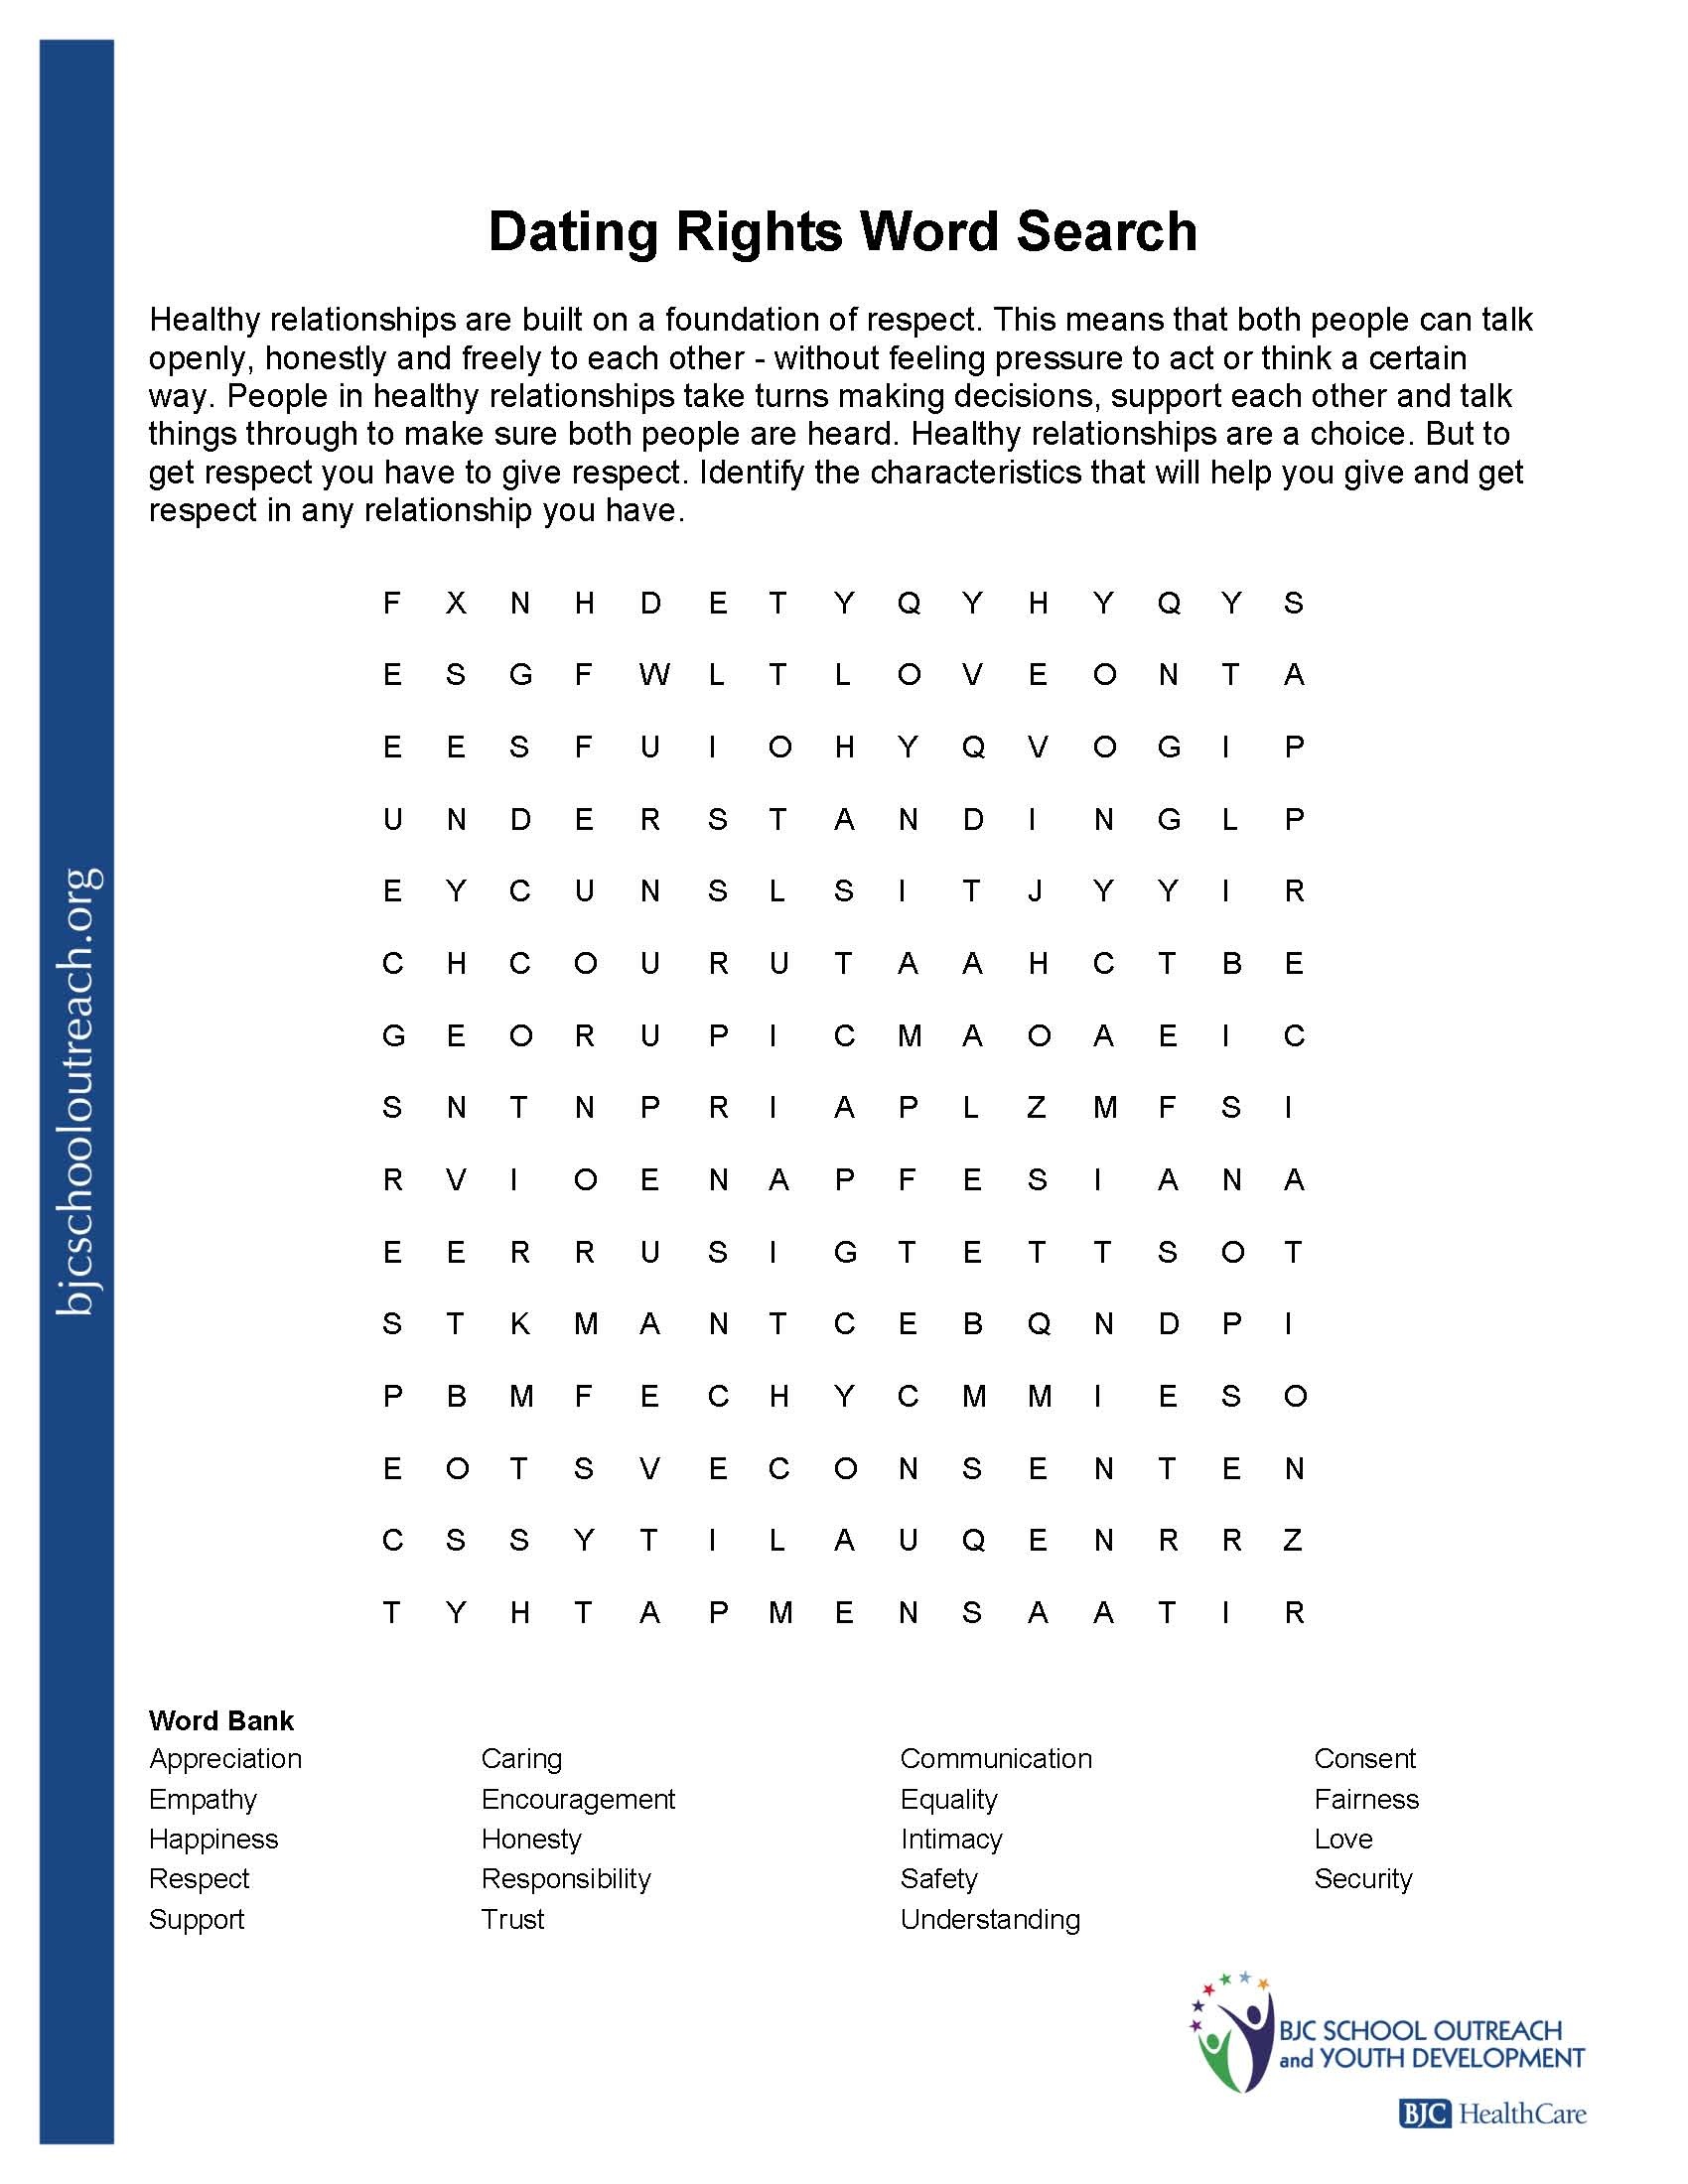 Printable Worksheets - Free Printable Health Worksheets For Middle School